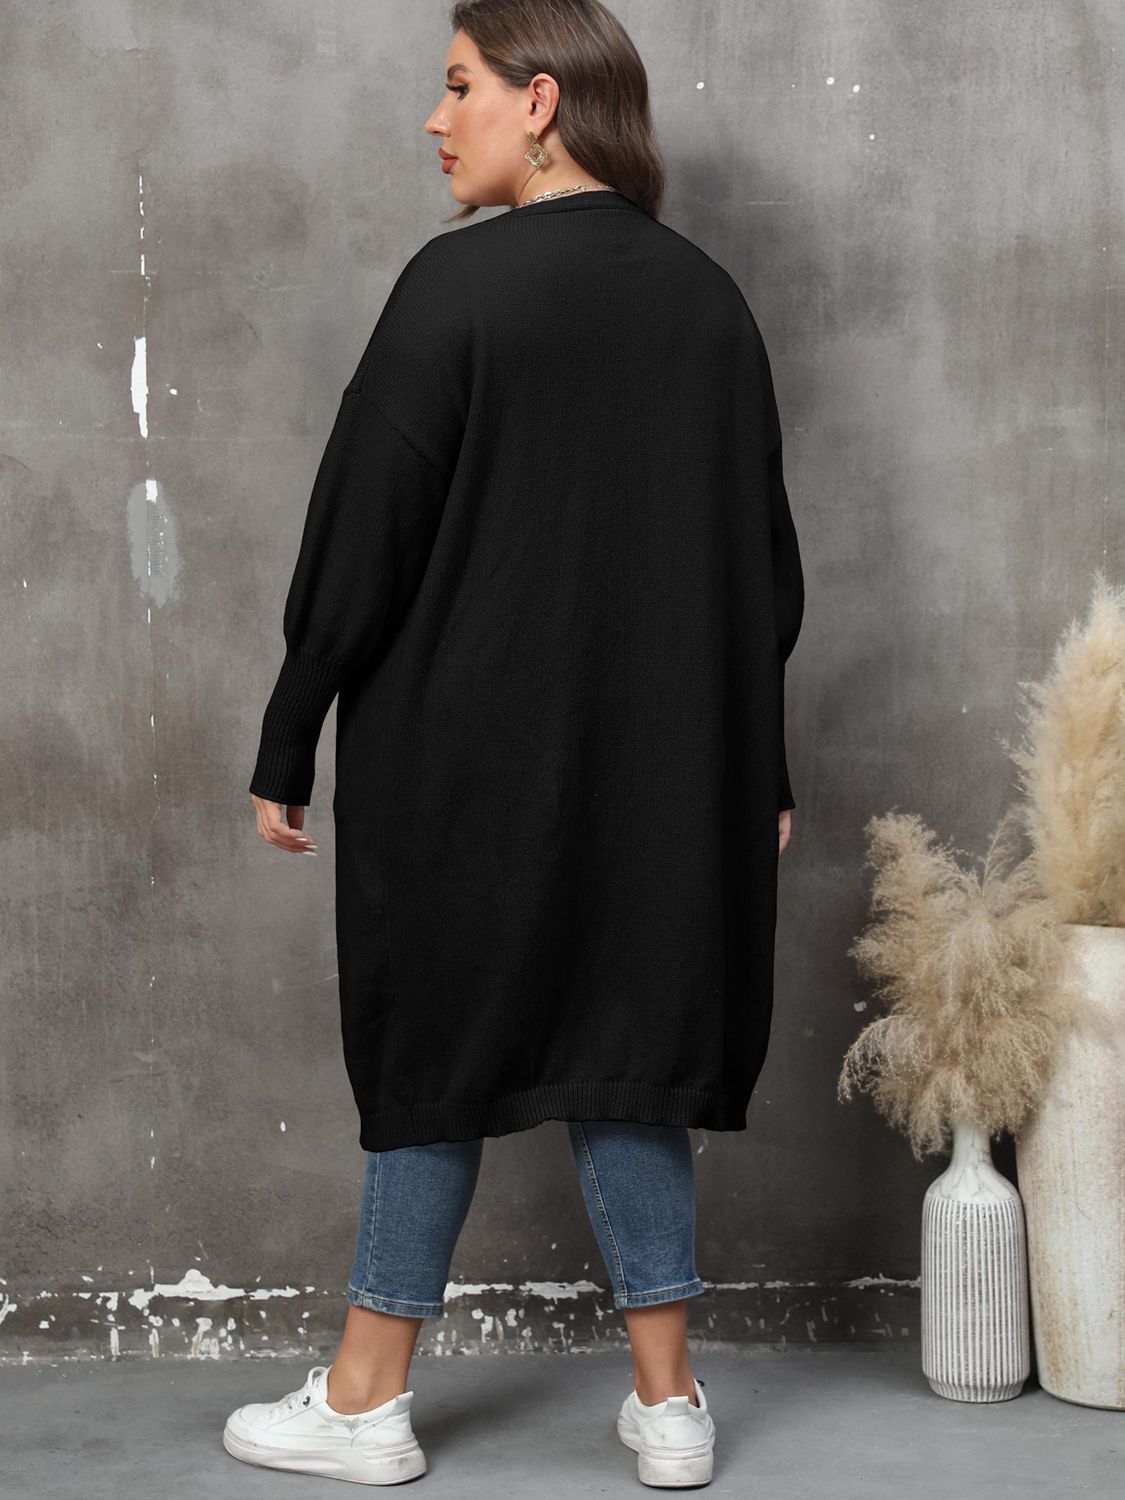 Plus Size Long Sleeve Pocketed Cardigan - Lola Cerina Boutique